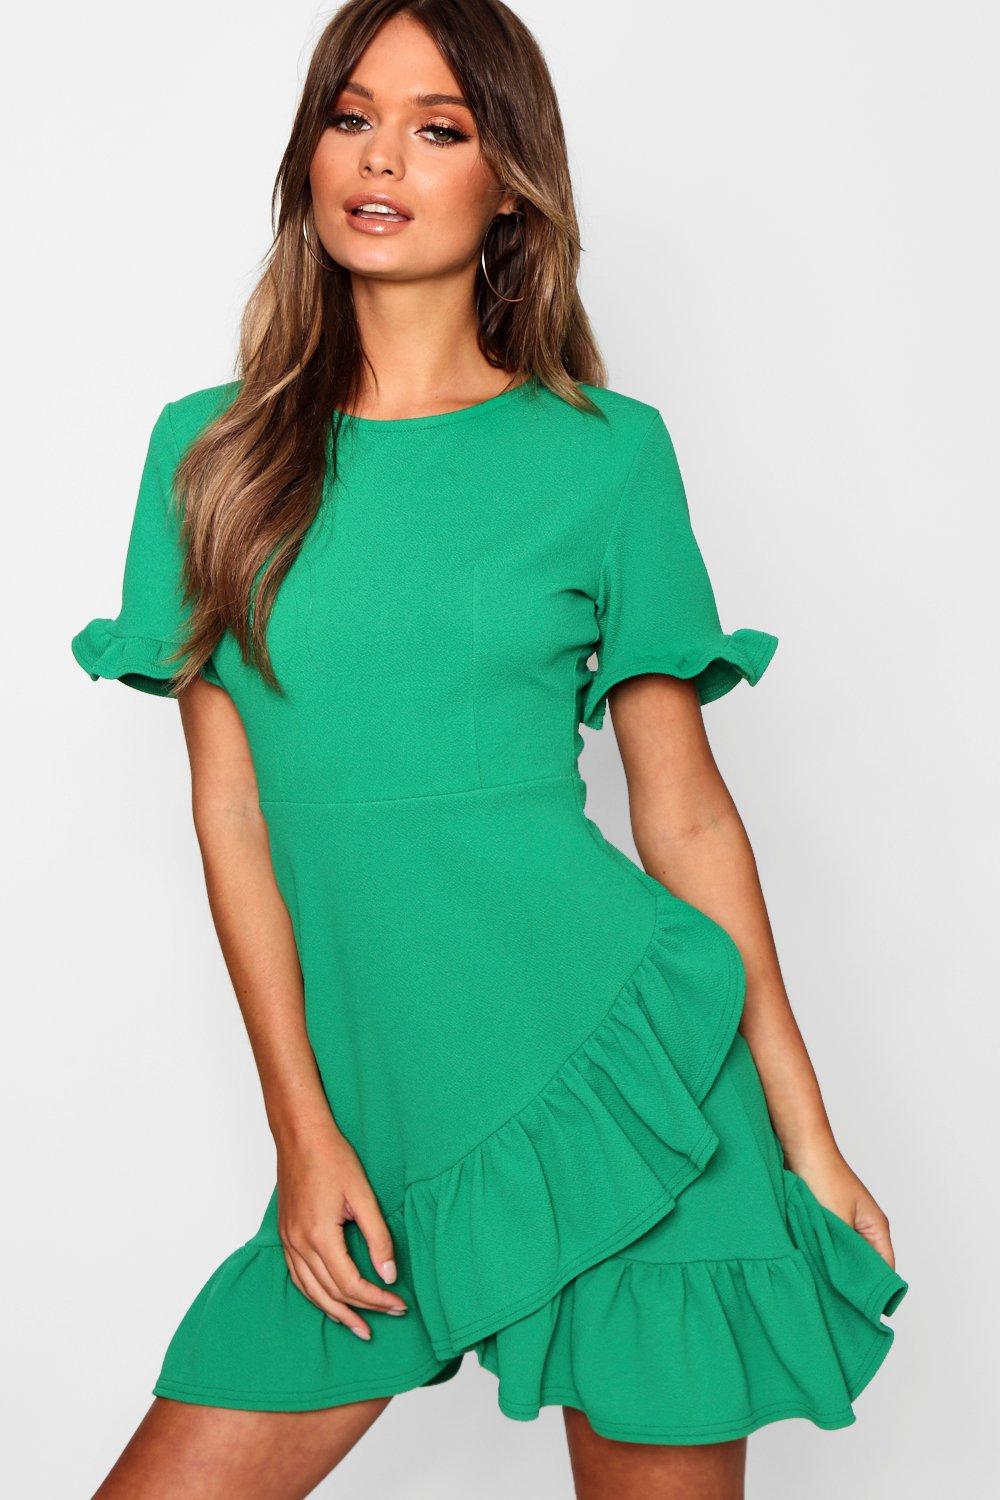 green ruffle dress